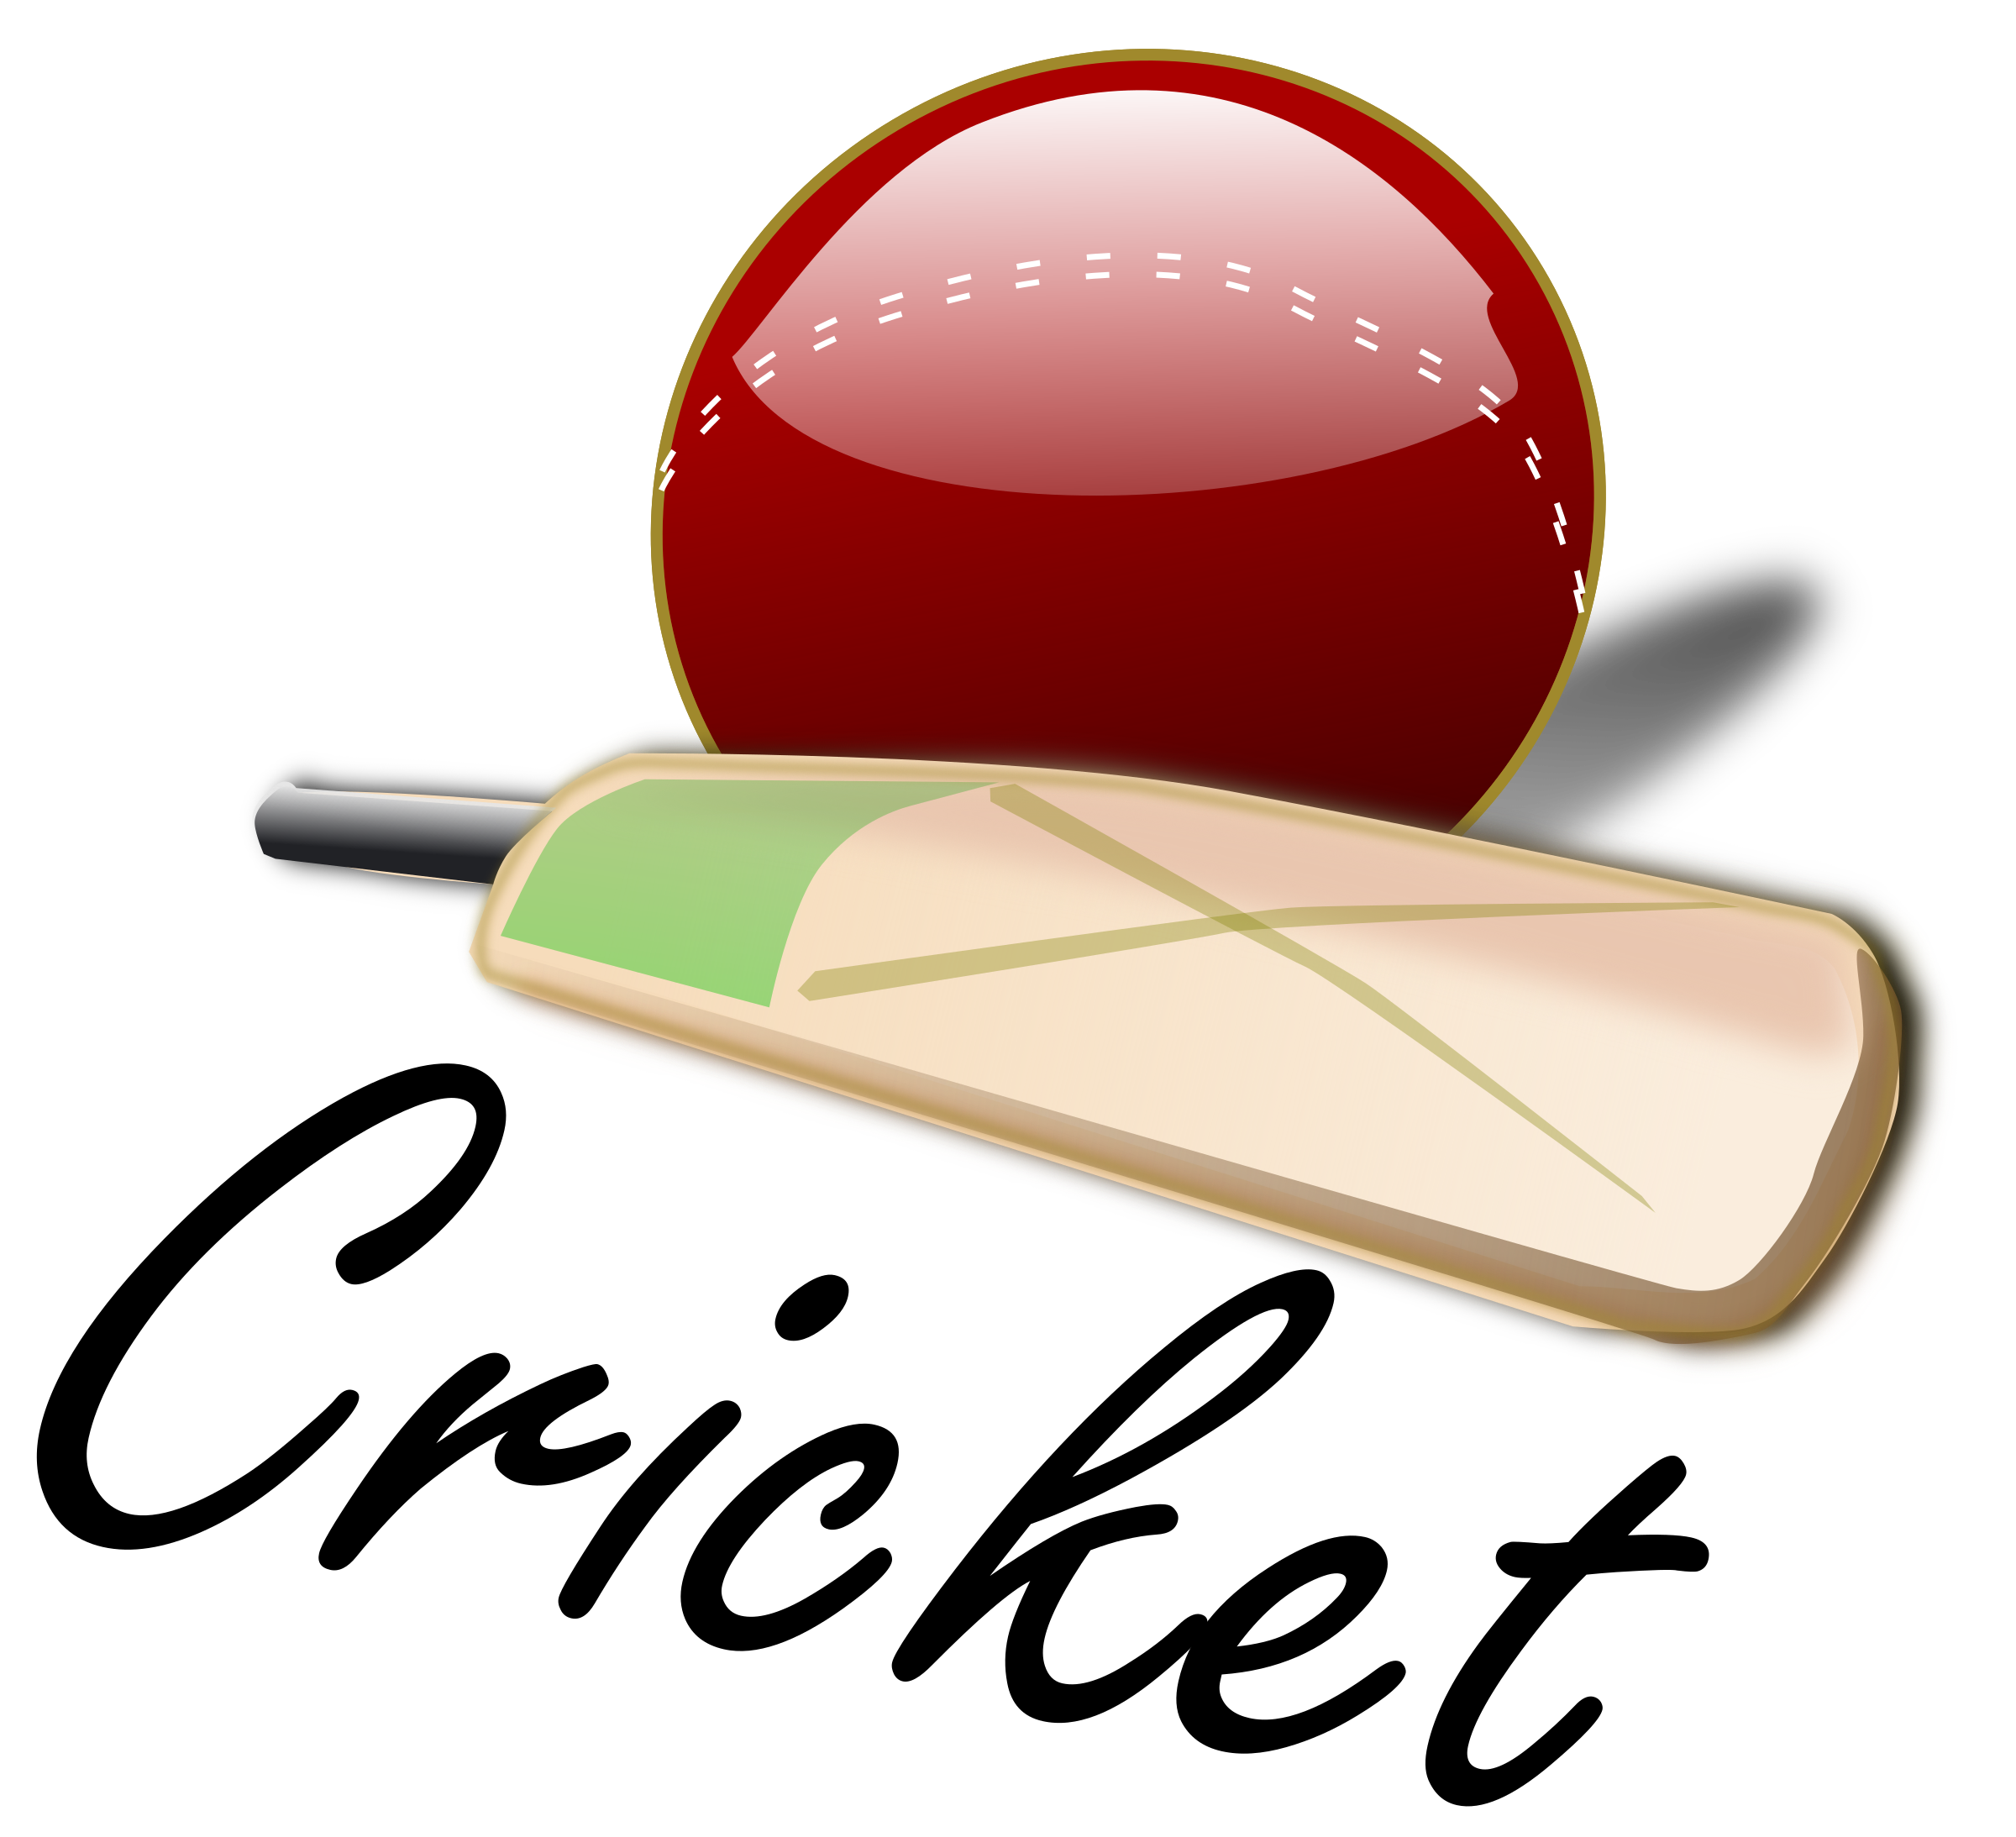 cricket logo clipart - photo #7